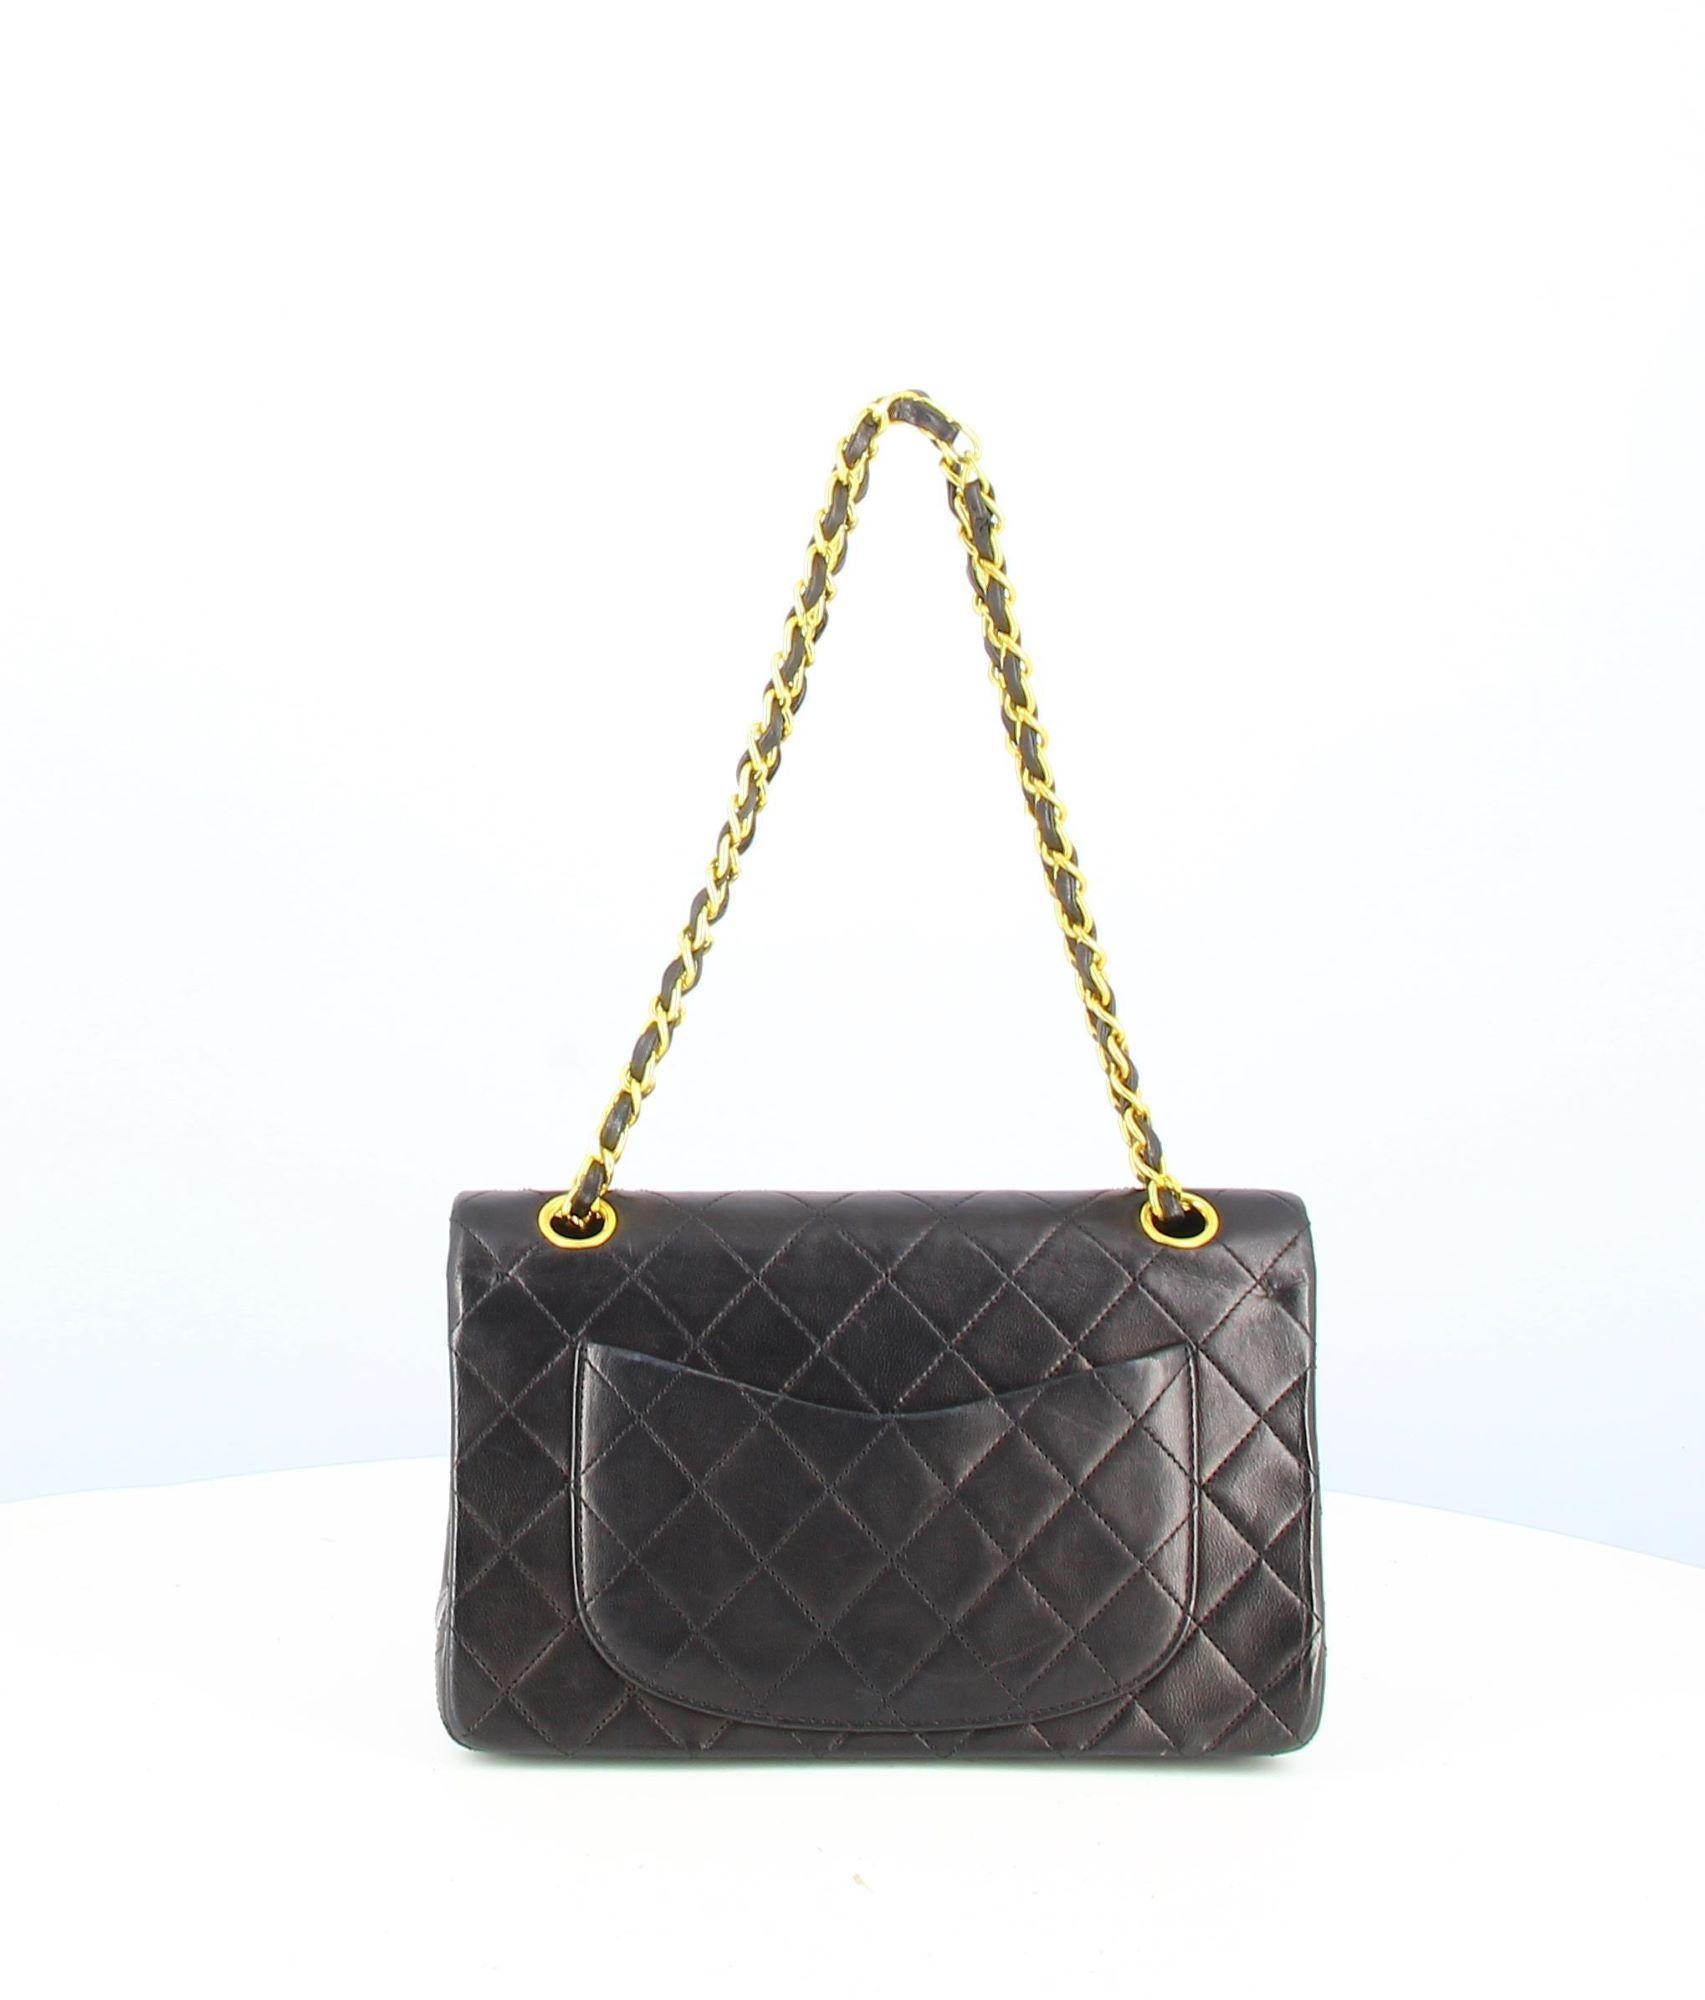 Women's 1994-1995 Chanel Timeless Black Quilted Handbag